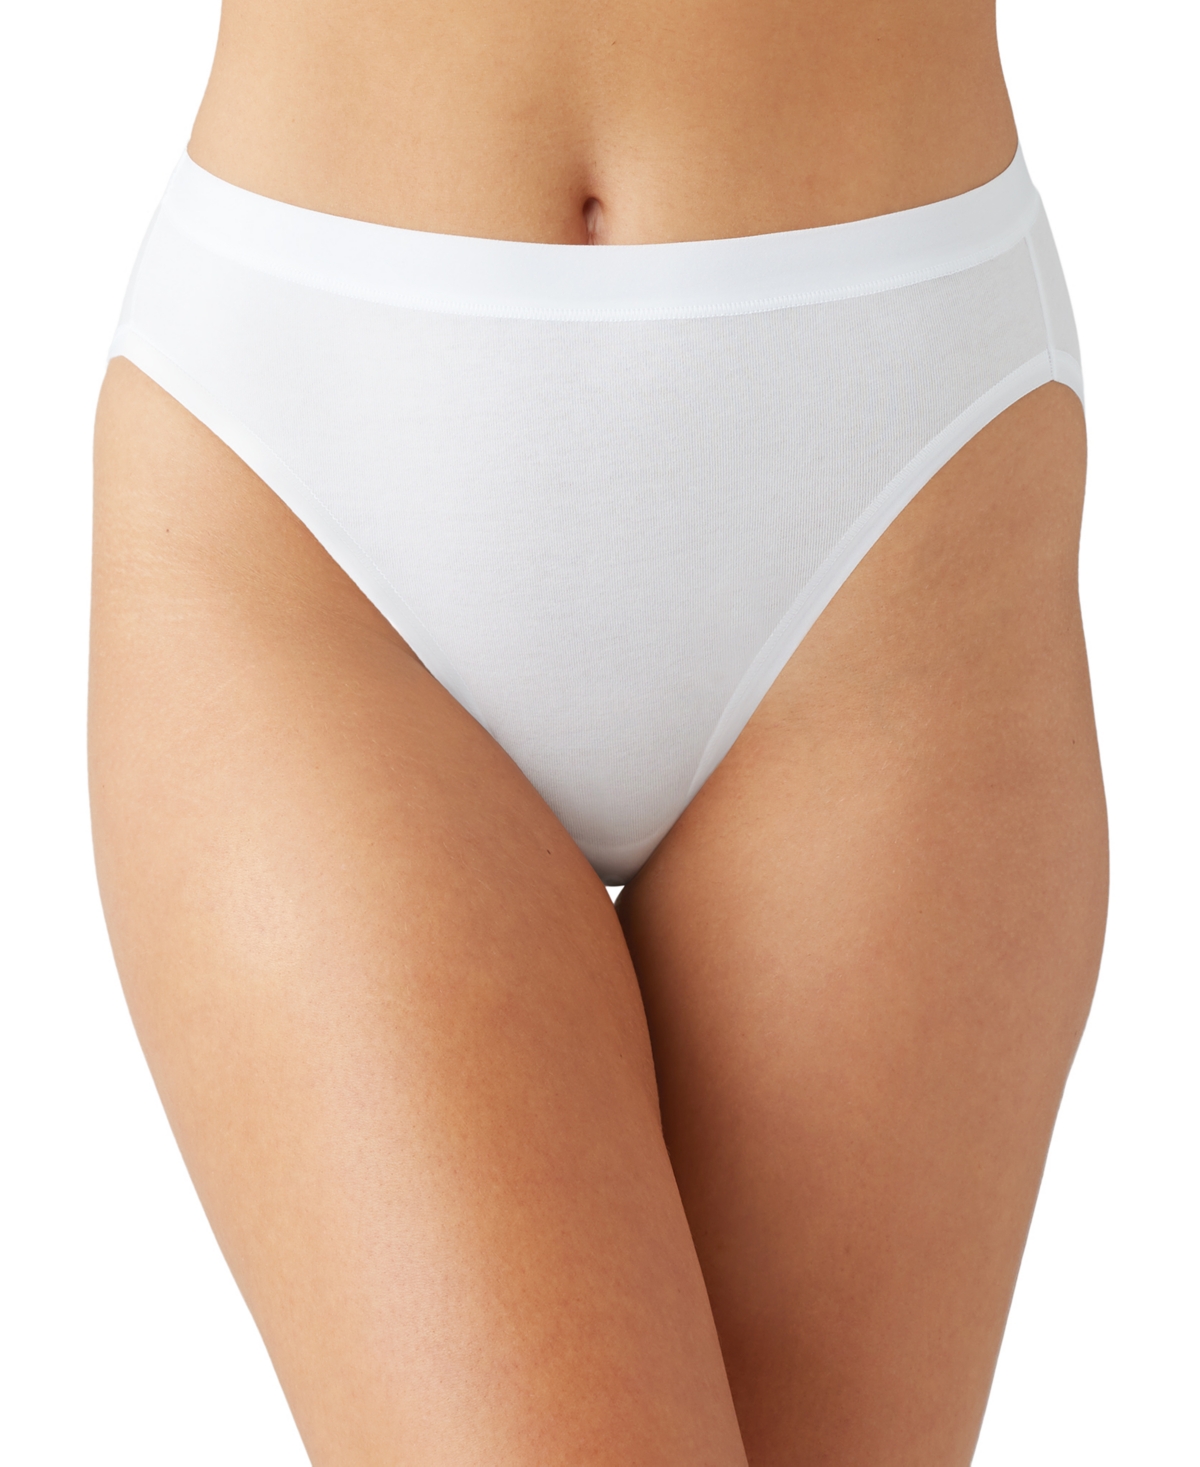 Shop Wacoal Women's Understated Cotton Hi-cut Underwear 879362 In White